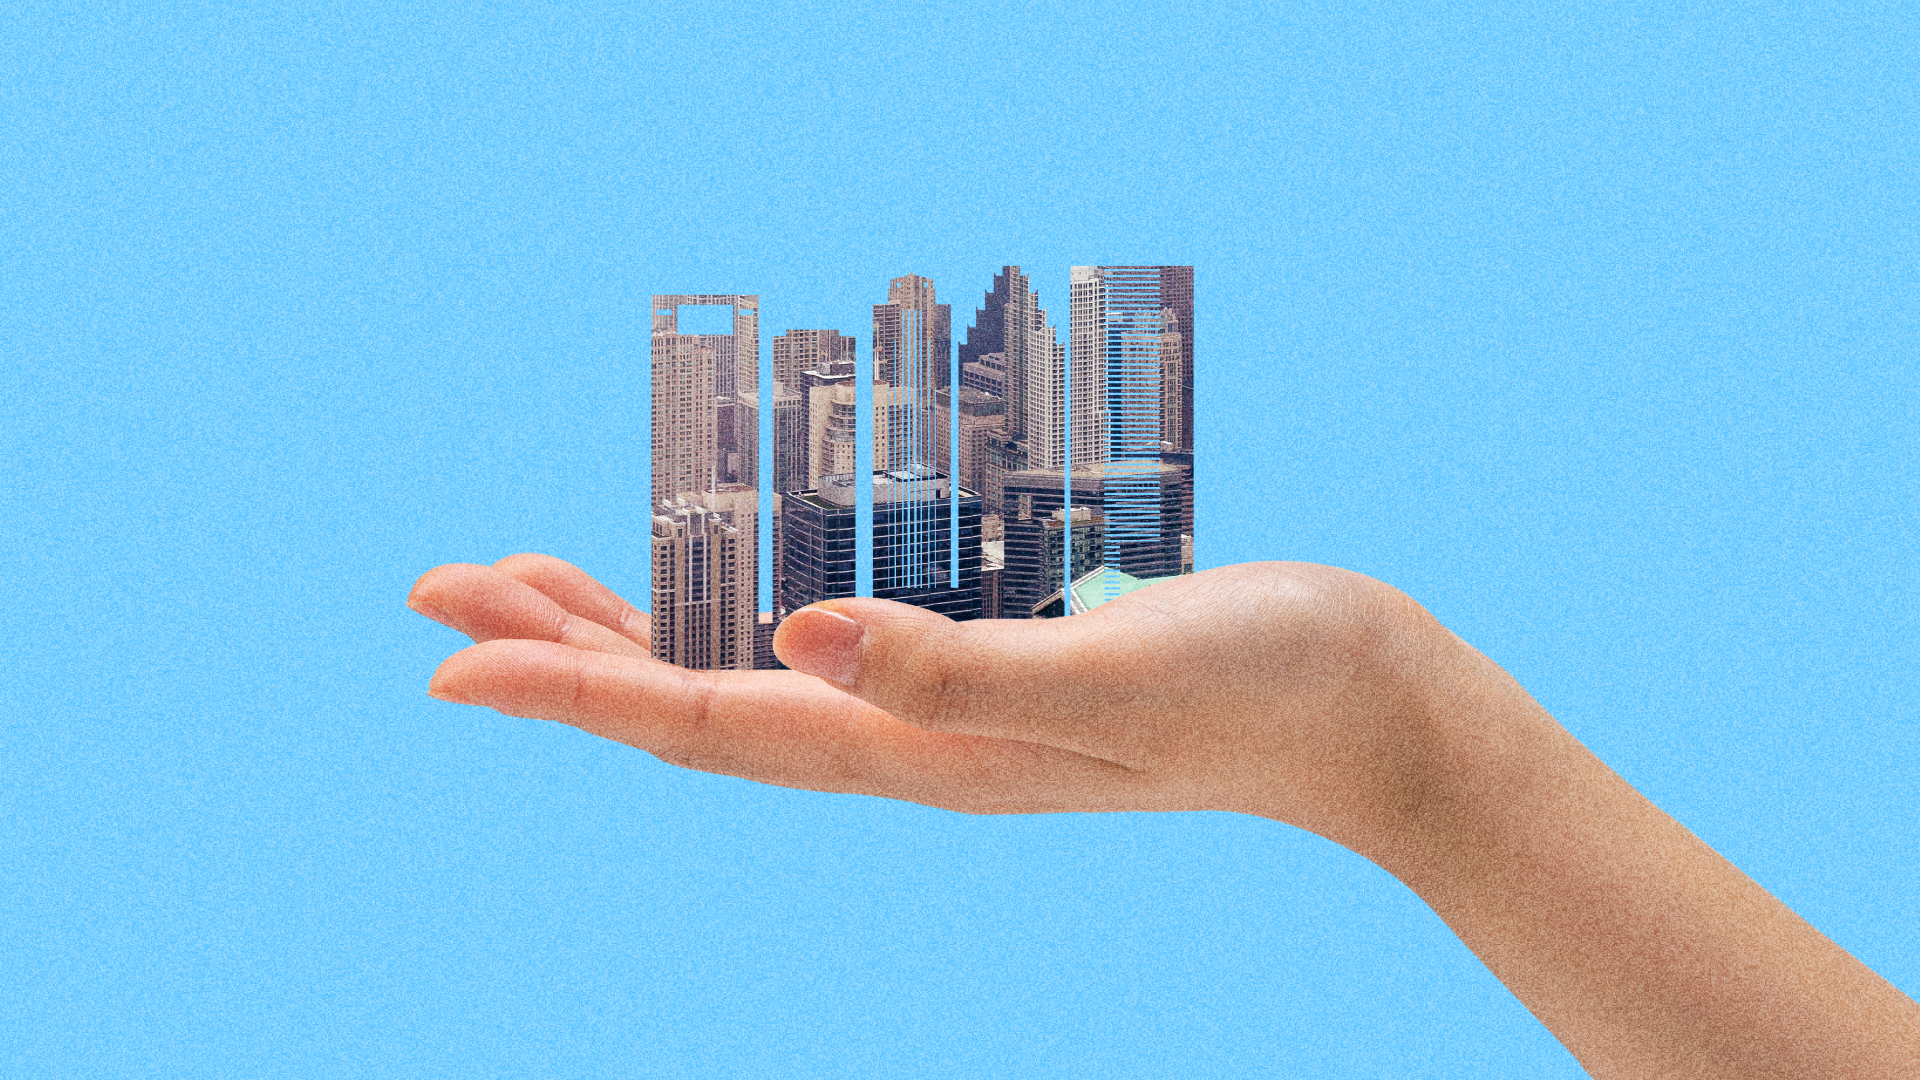 hand holds up city skyline